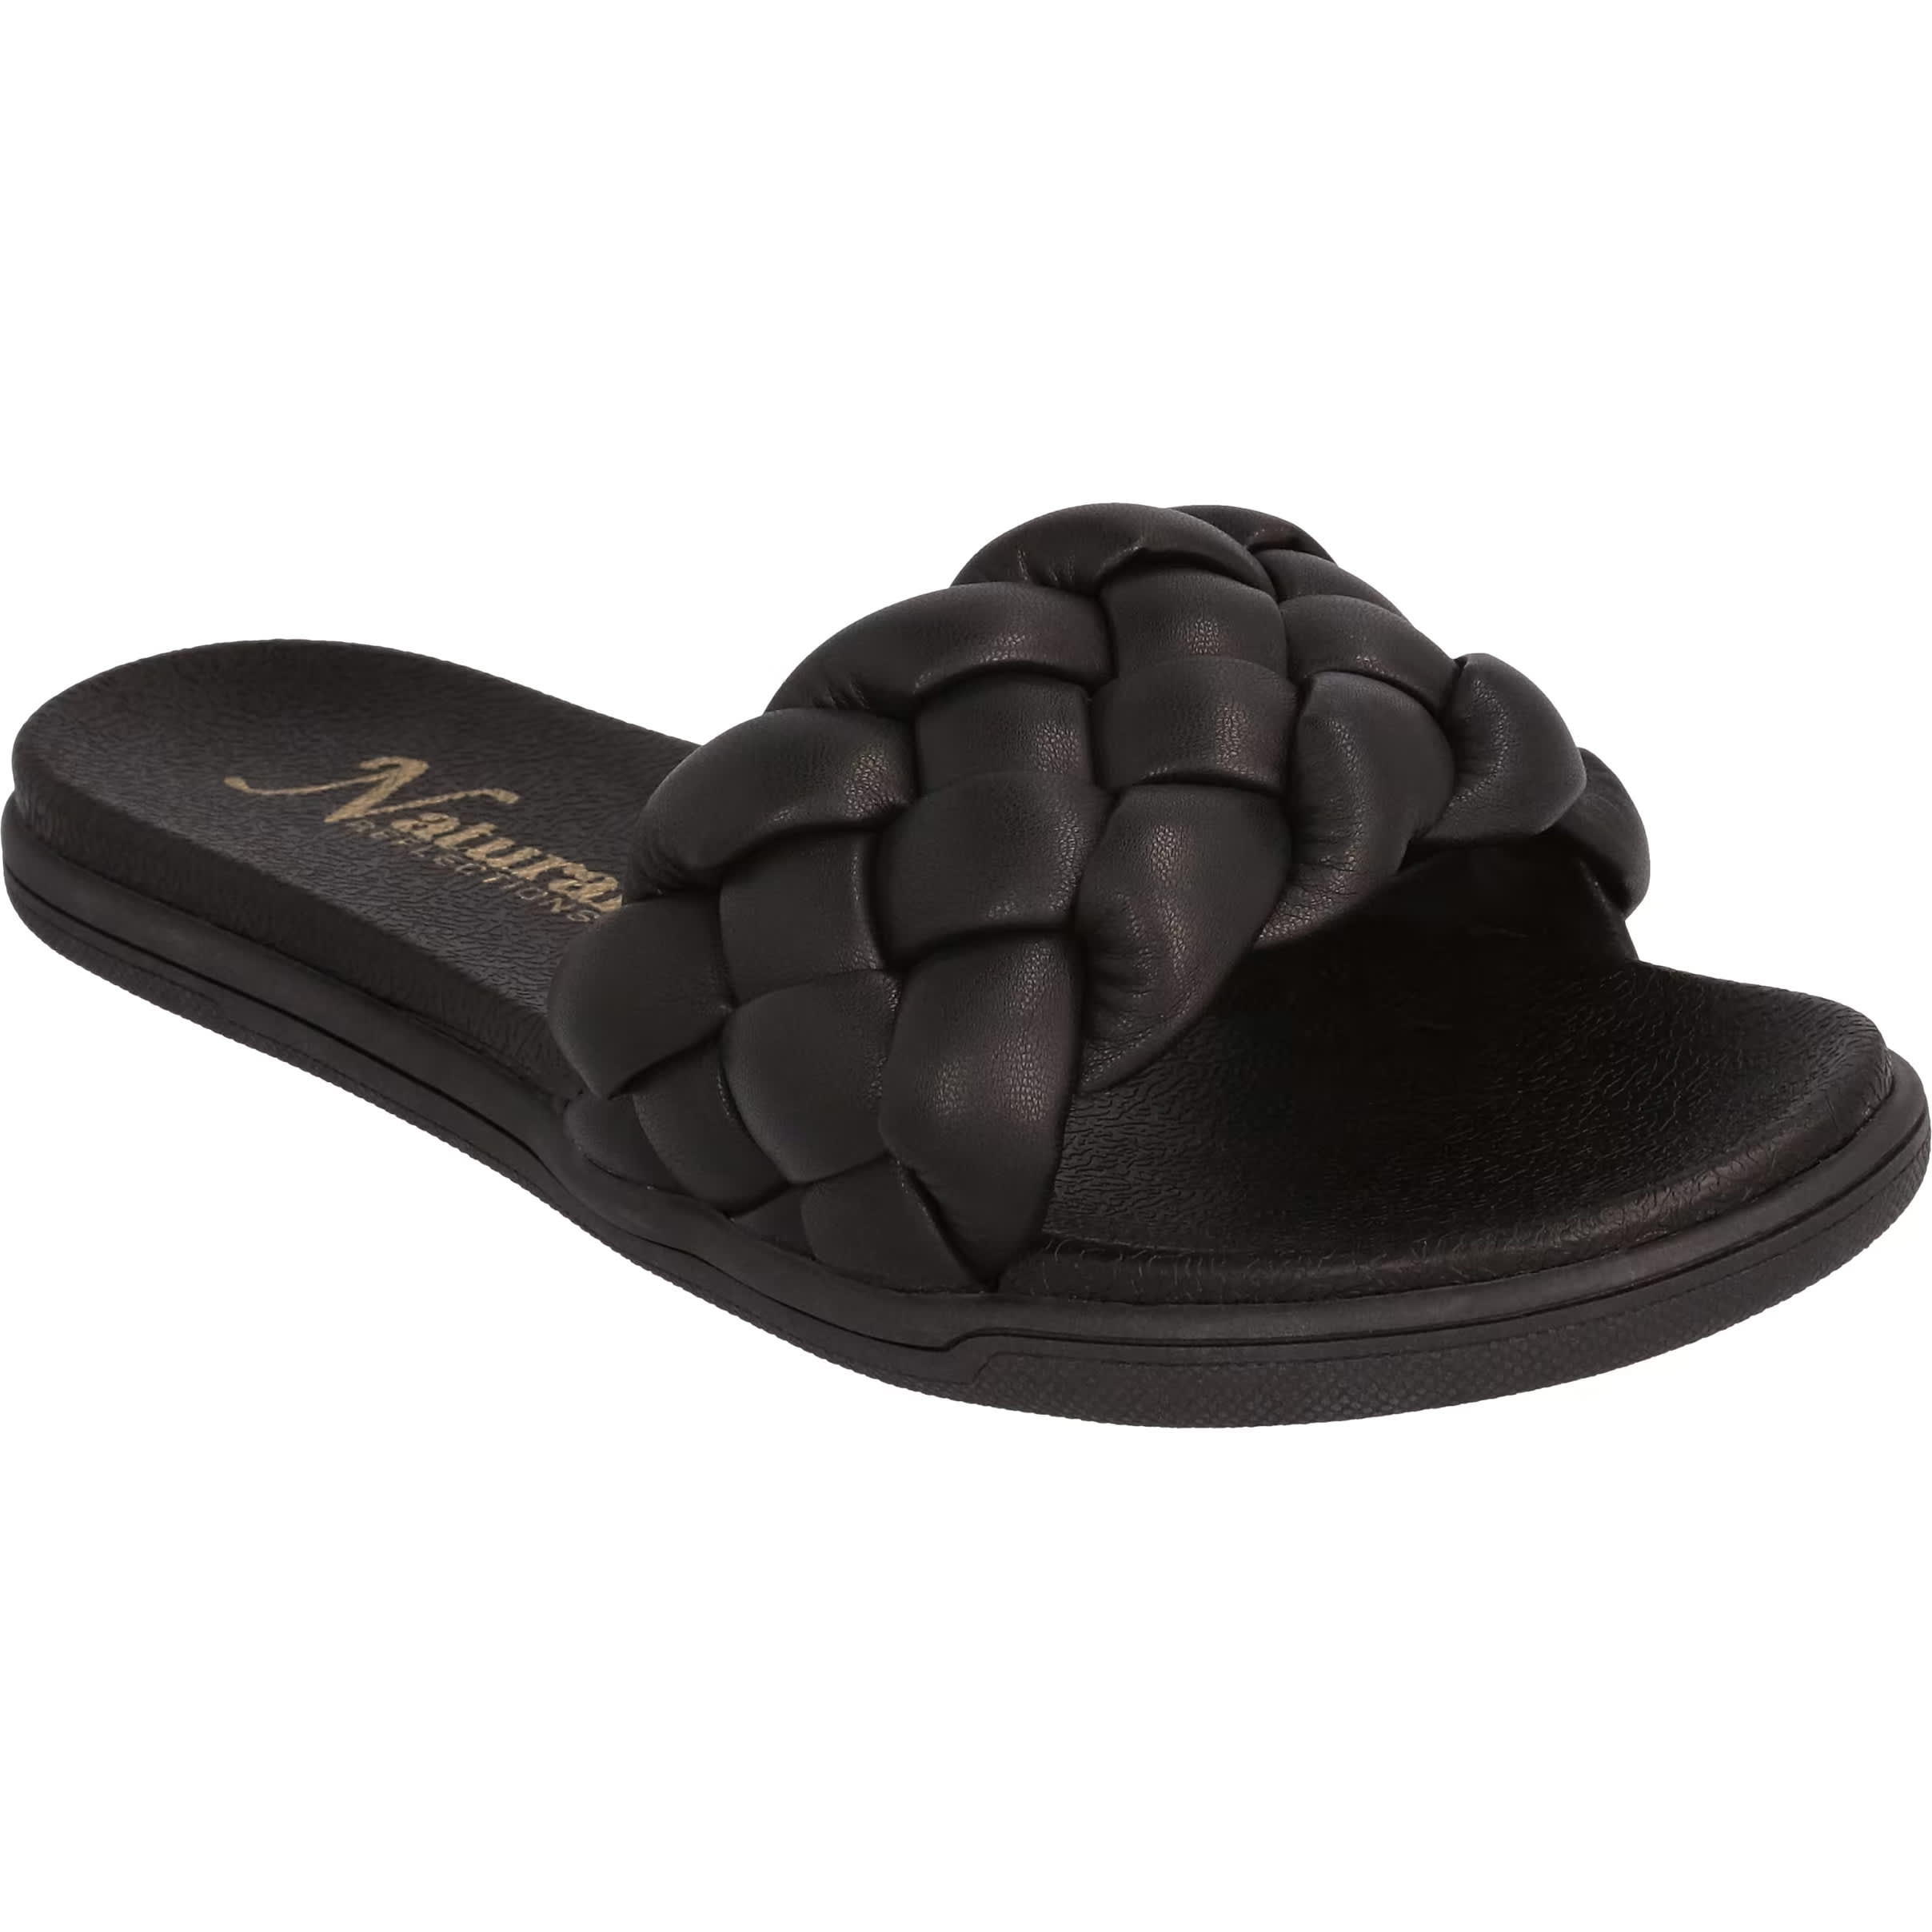 EARTH Women's Freesia Negative Heel Leather Comfort Sandals Flip Flops Size  10 B